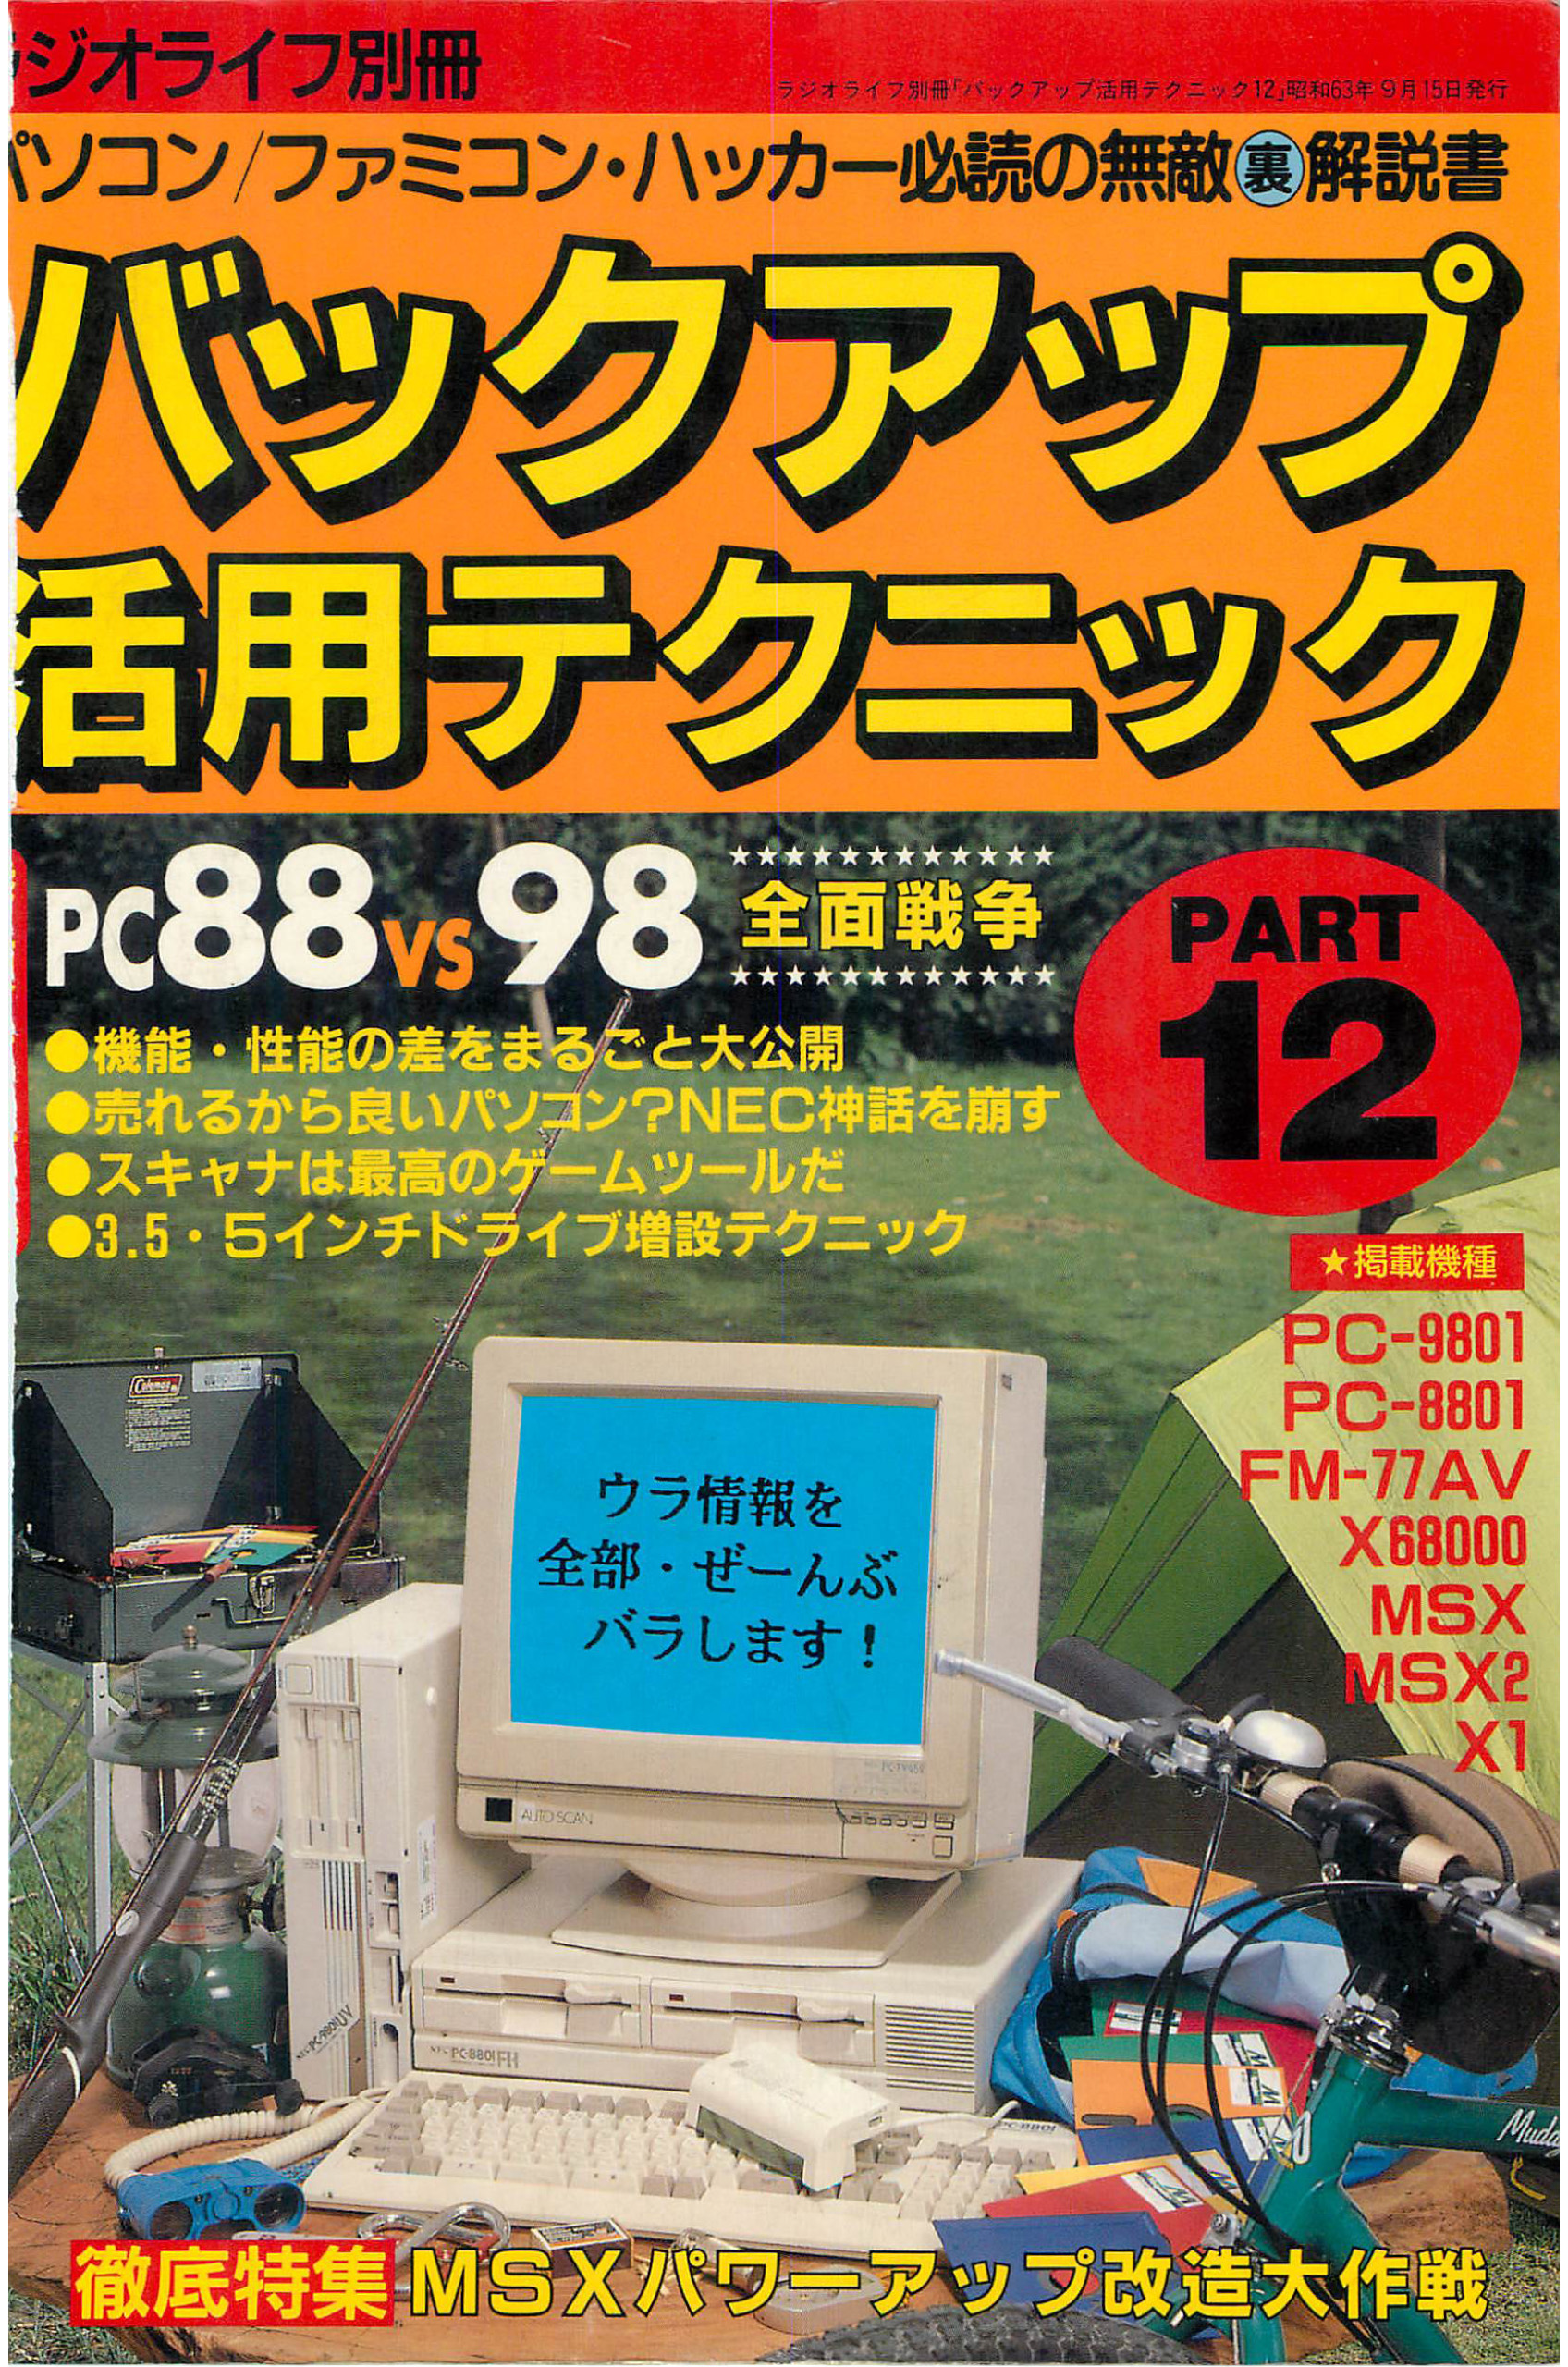 MSX TurboR専用ソフト 幻影都市 ユーザーディスク付きその他 